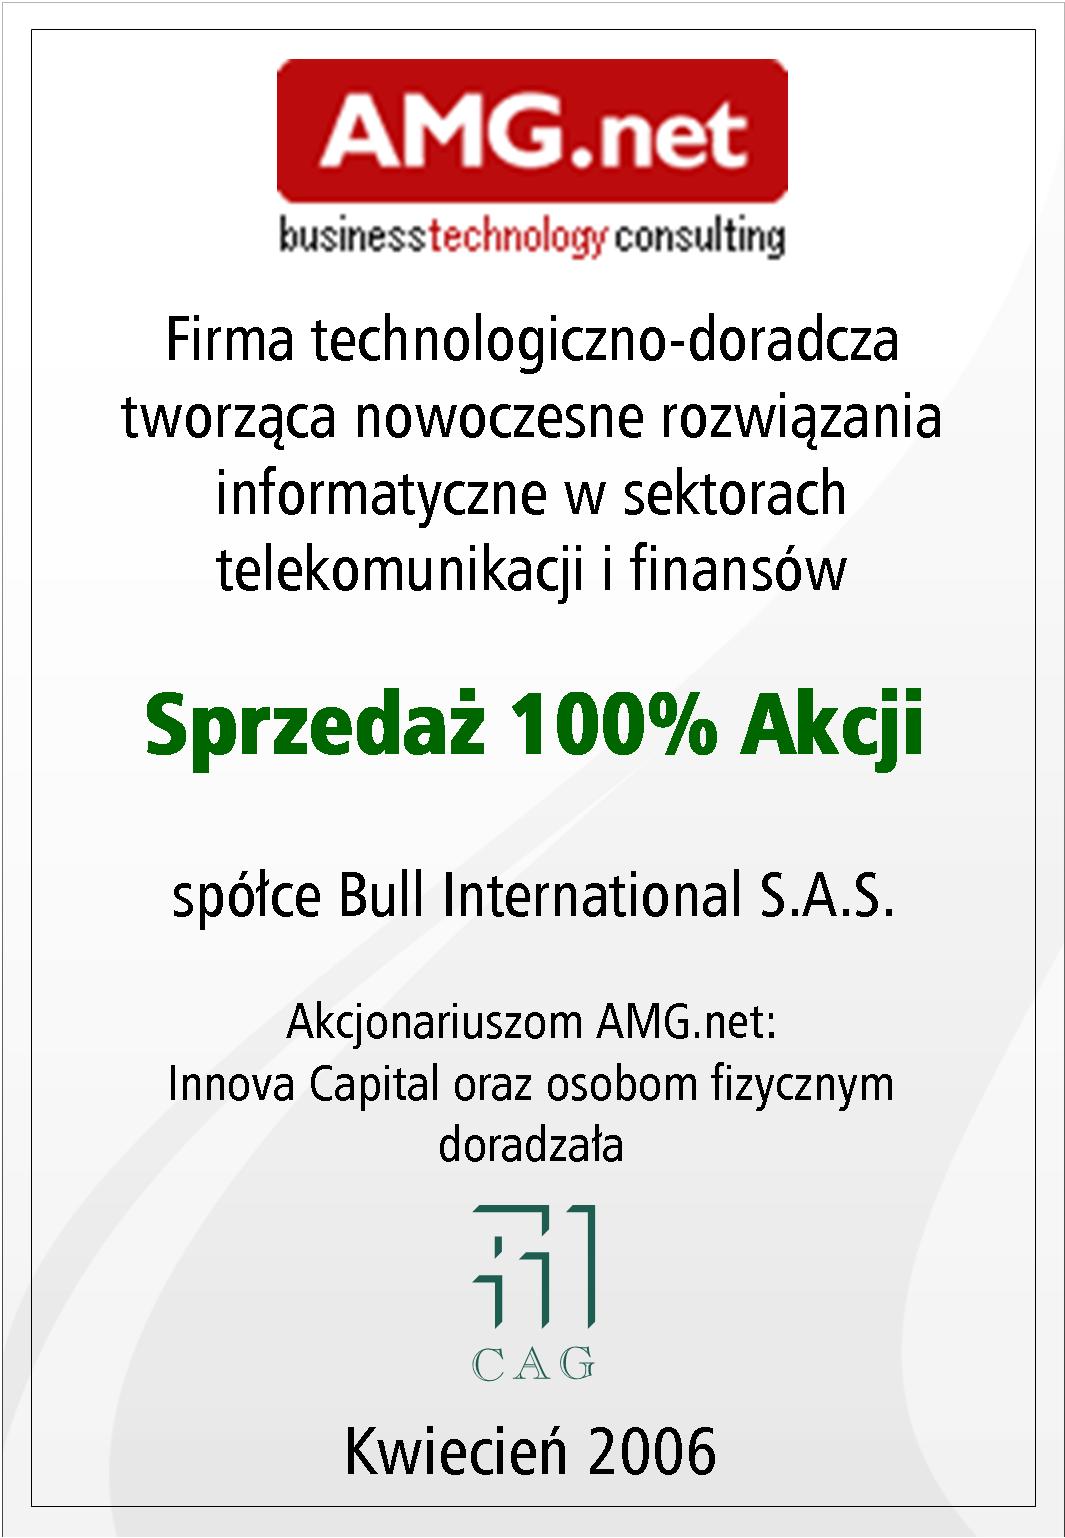 AMG.net